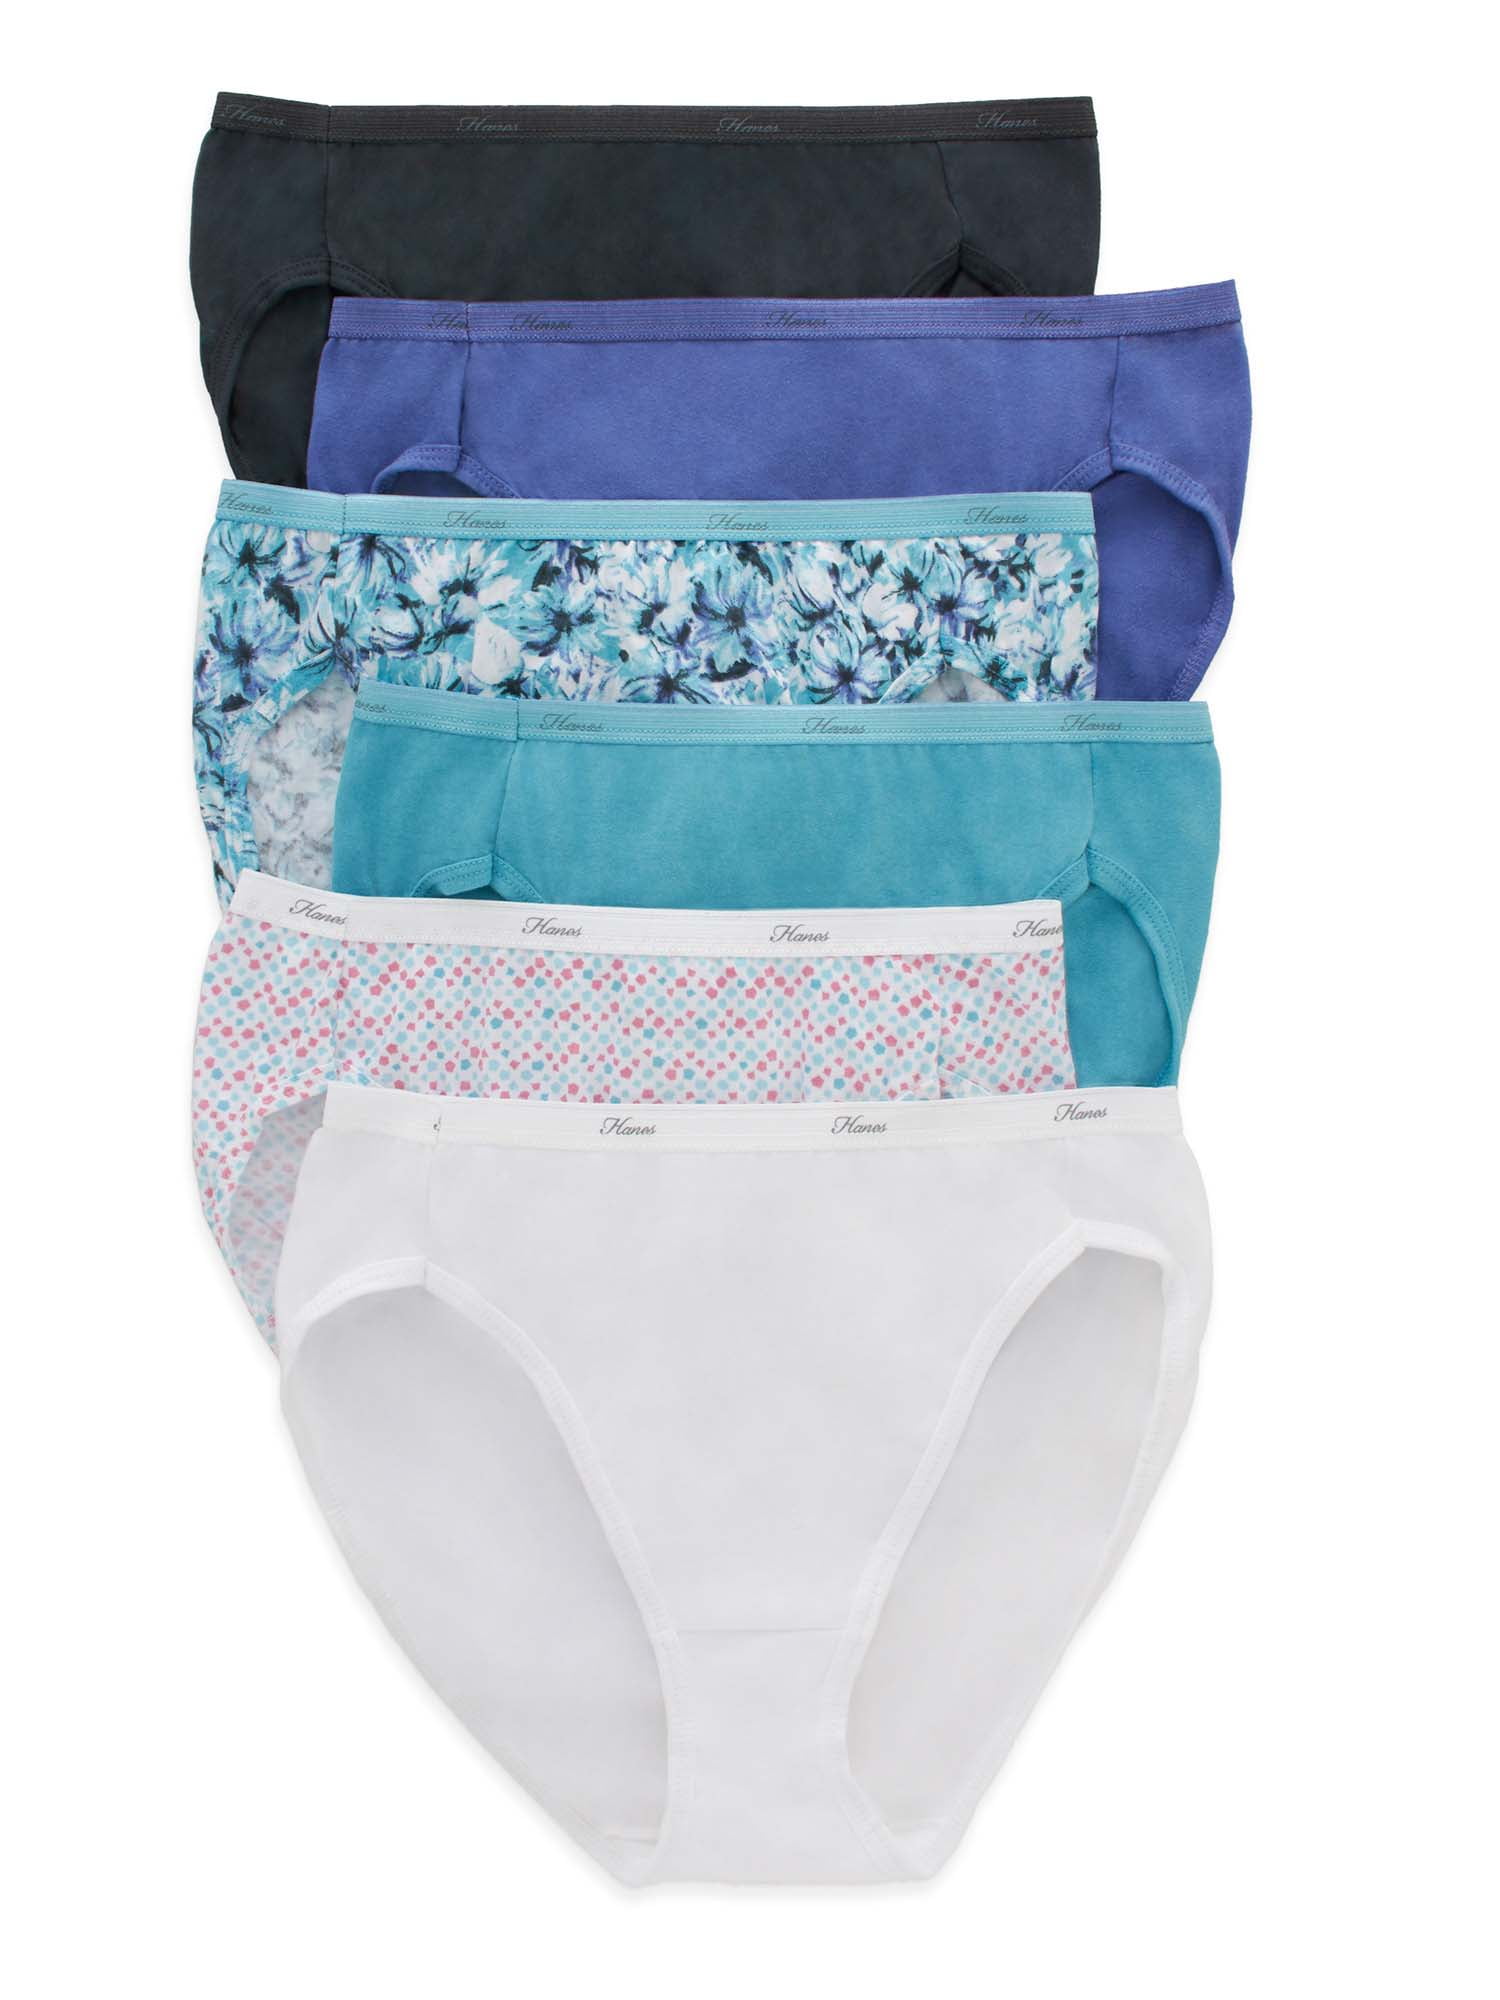 Hanes Women's Soft Cotton Tagless Hi Cut Panty (Pack of 6)